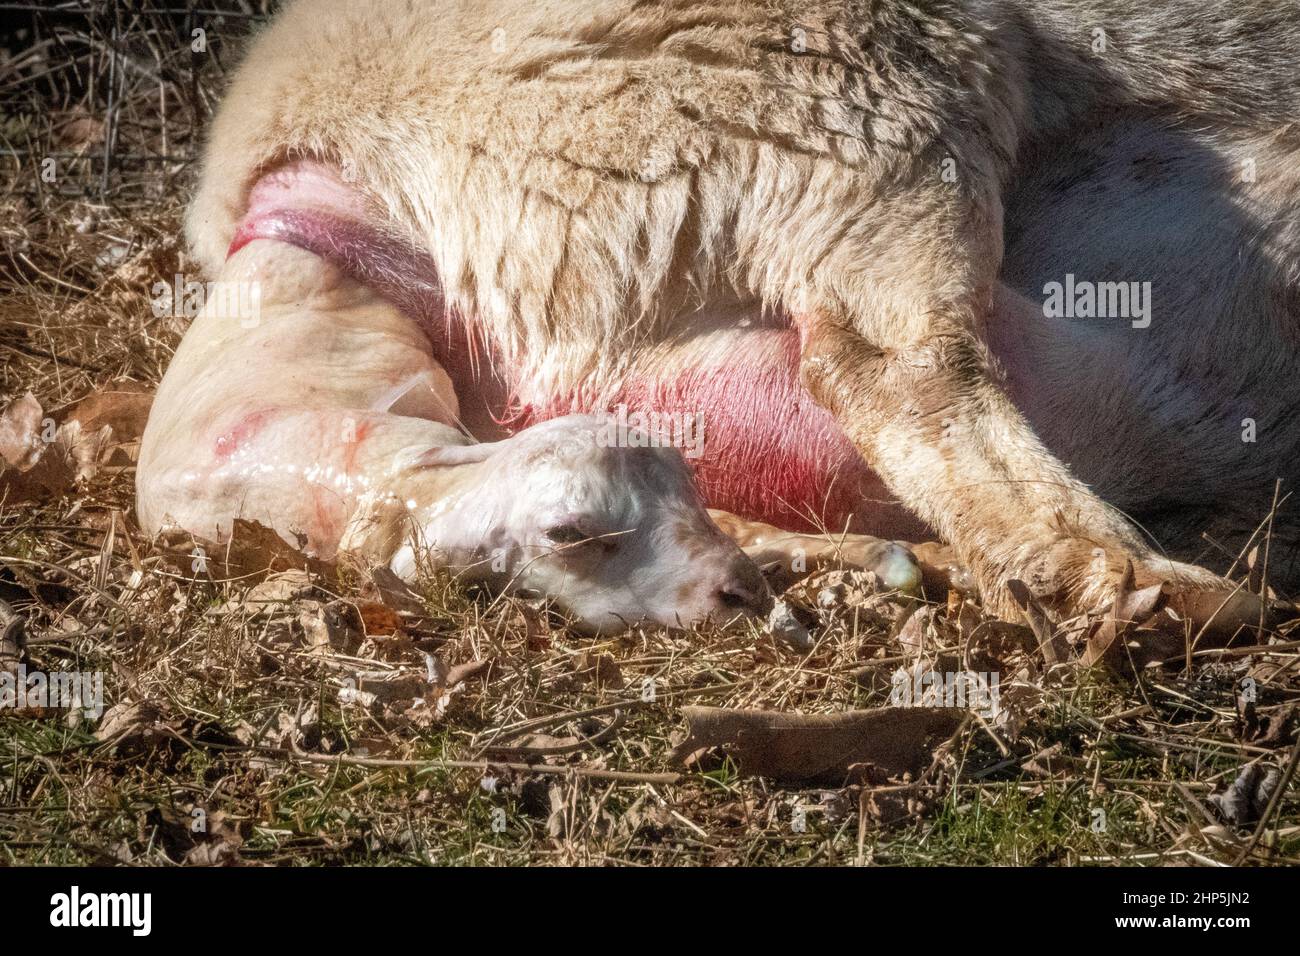 Mutter Schafe (Mutterschafe) gebären Lamm Stockfoto